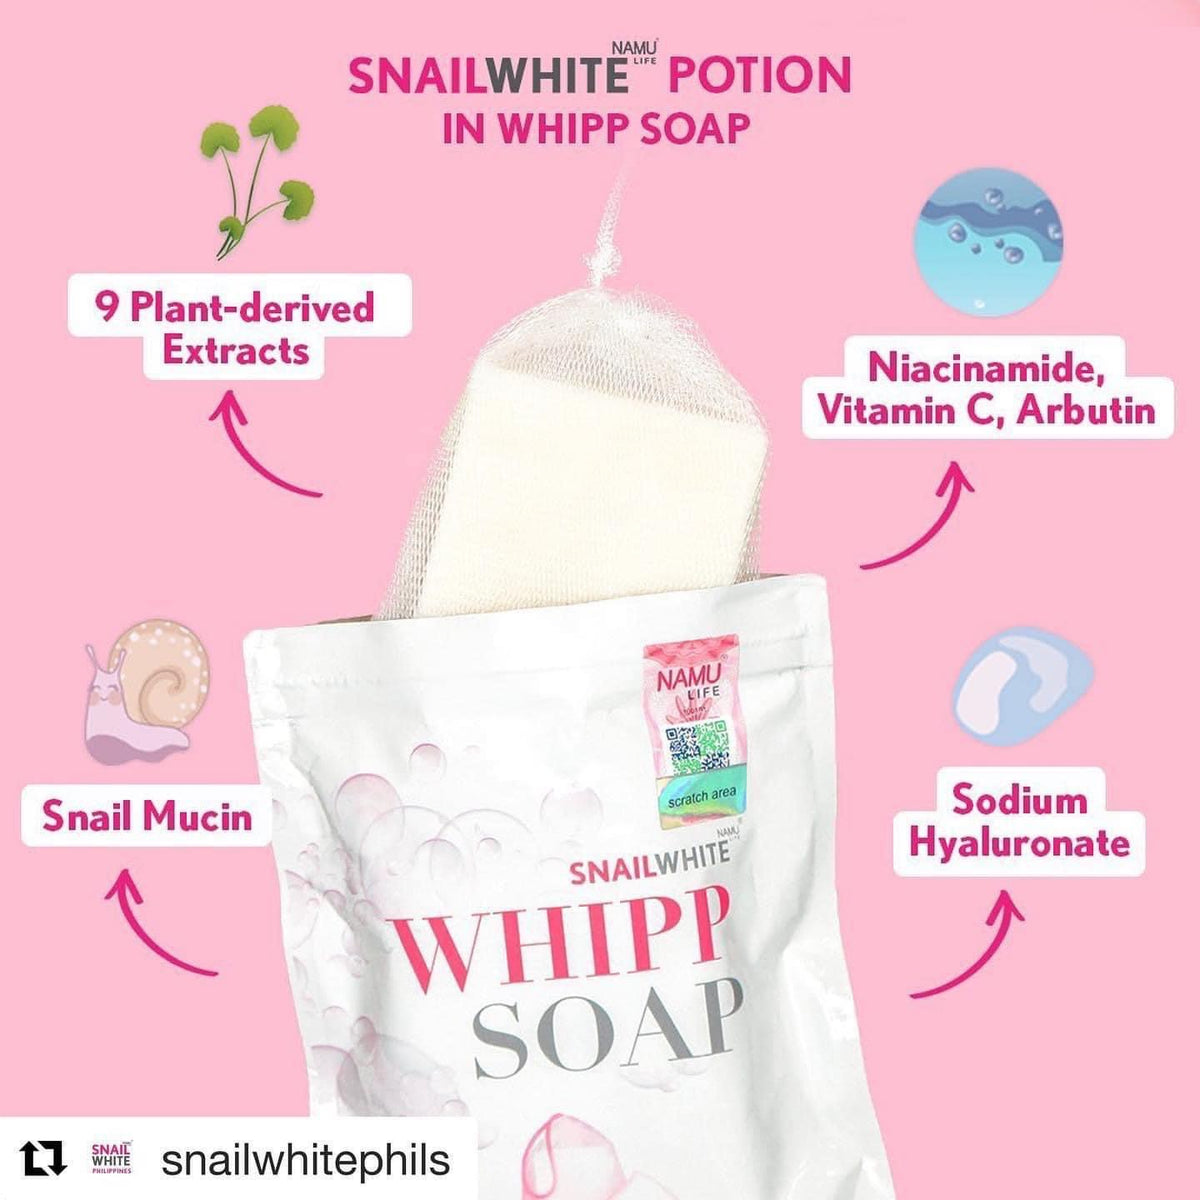 Snail White Whipp Soap by Namu 100g – My Care Kits